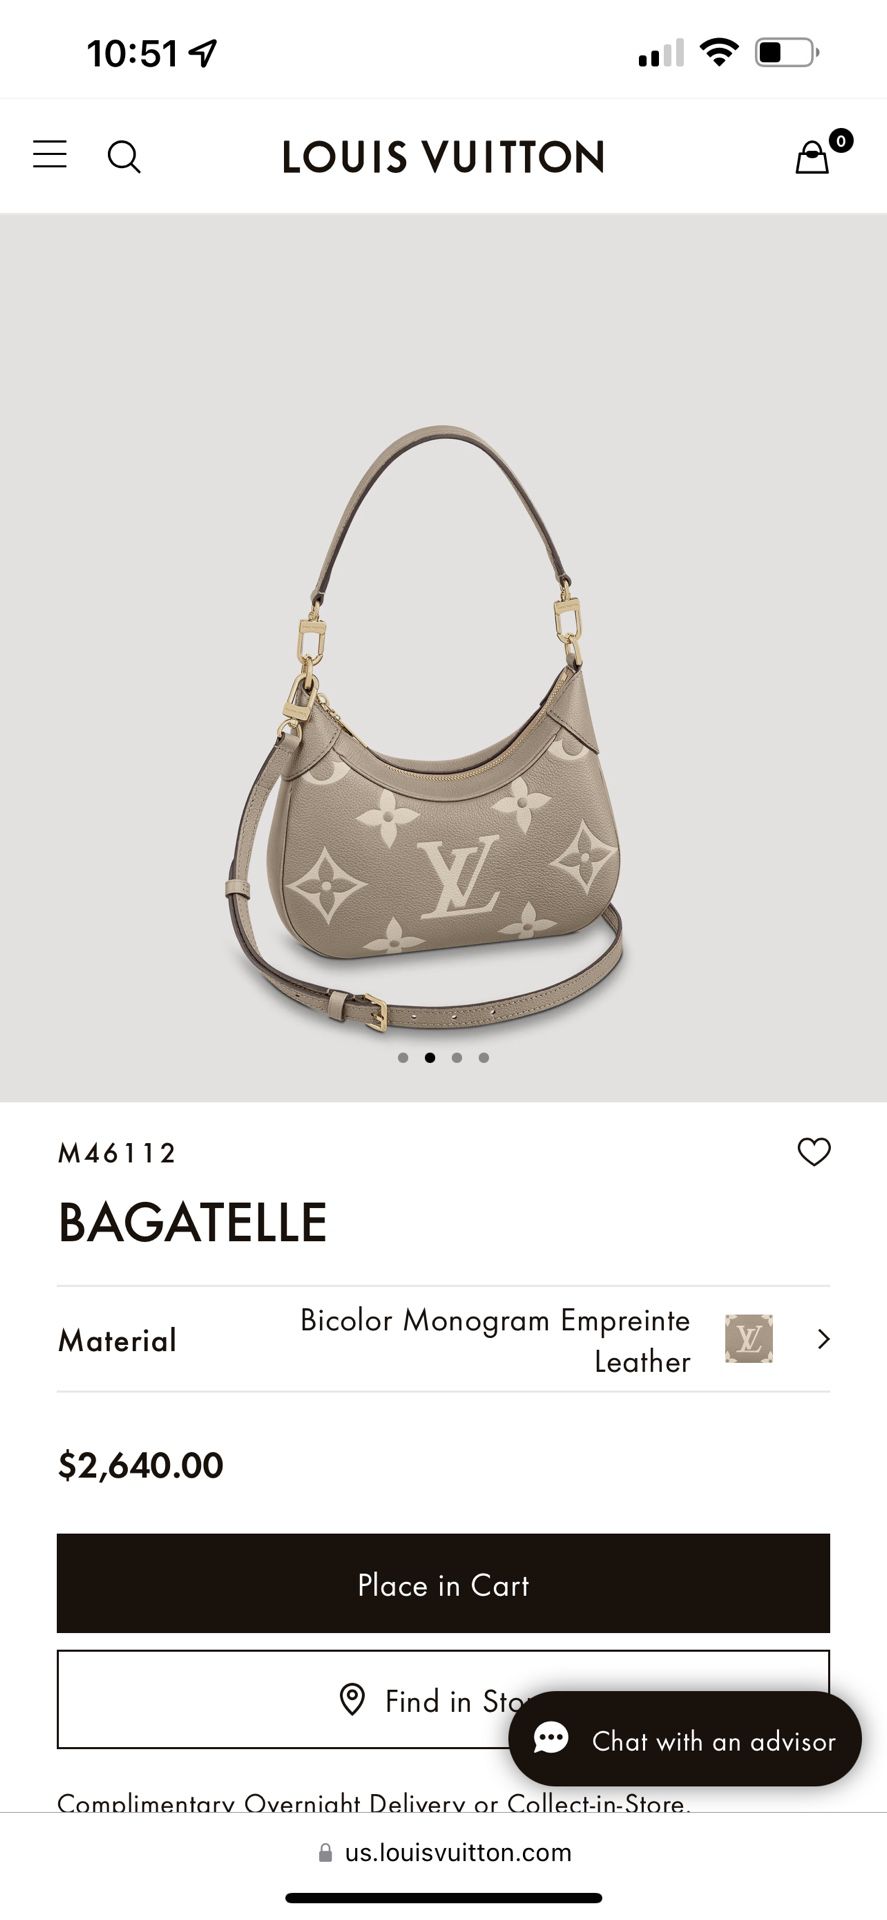 Bagatelle Bicolor Monogram Empreinte Leather